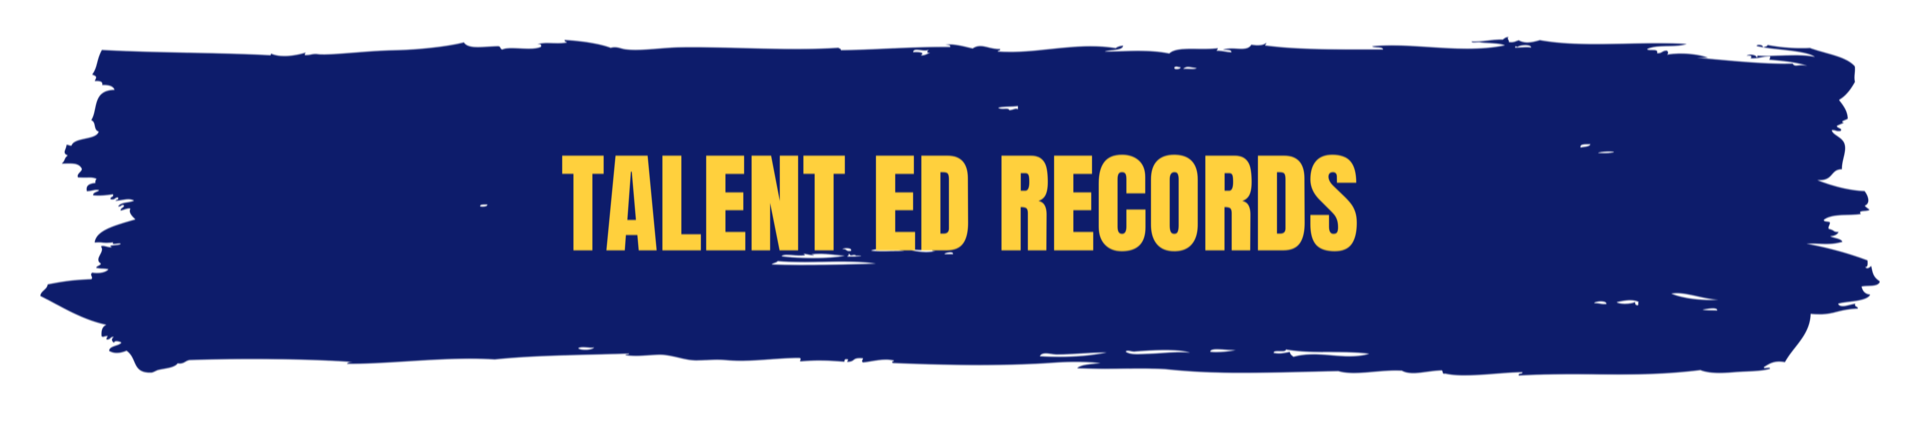 Talent ED Records link